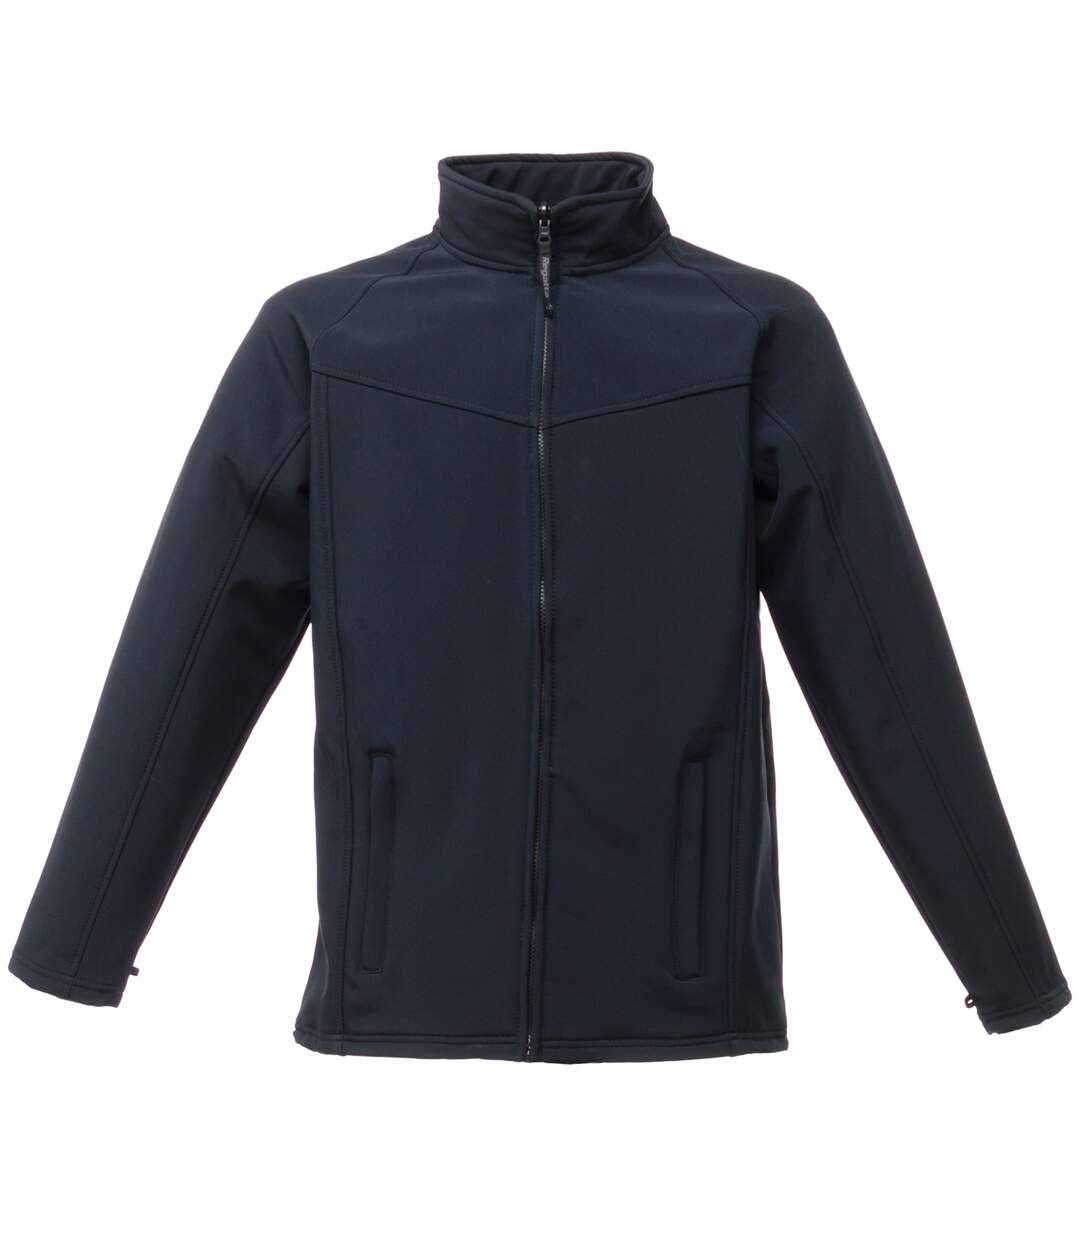 Regatta Professional Mens Uproar Softshell Wind Resistant Fleece Jacket (Black/Black) - UTBC811